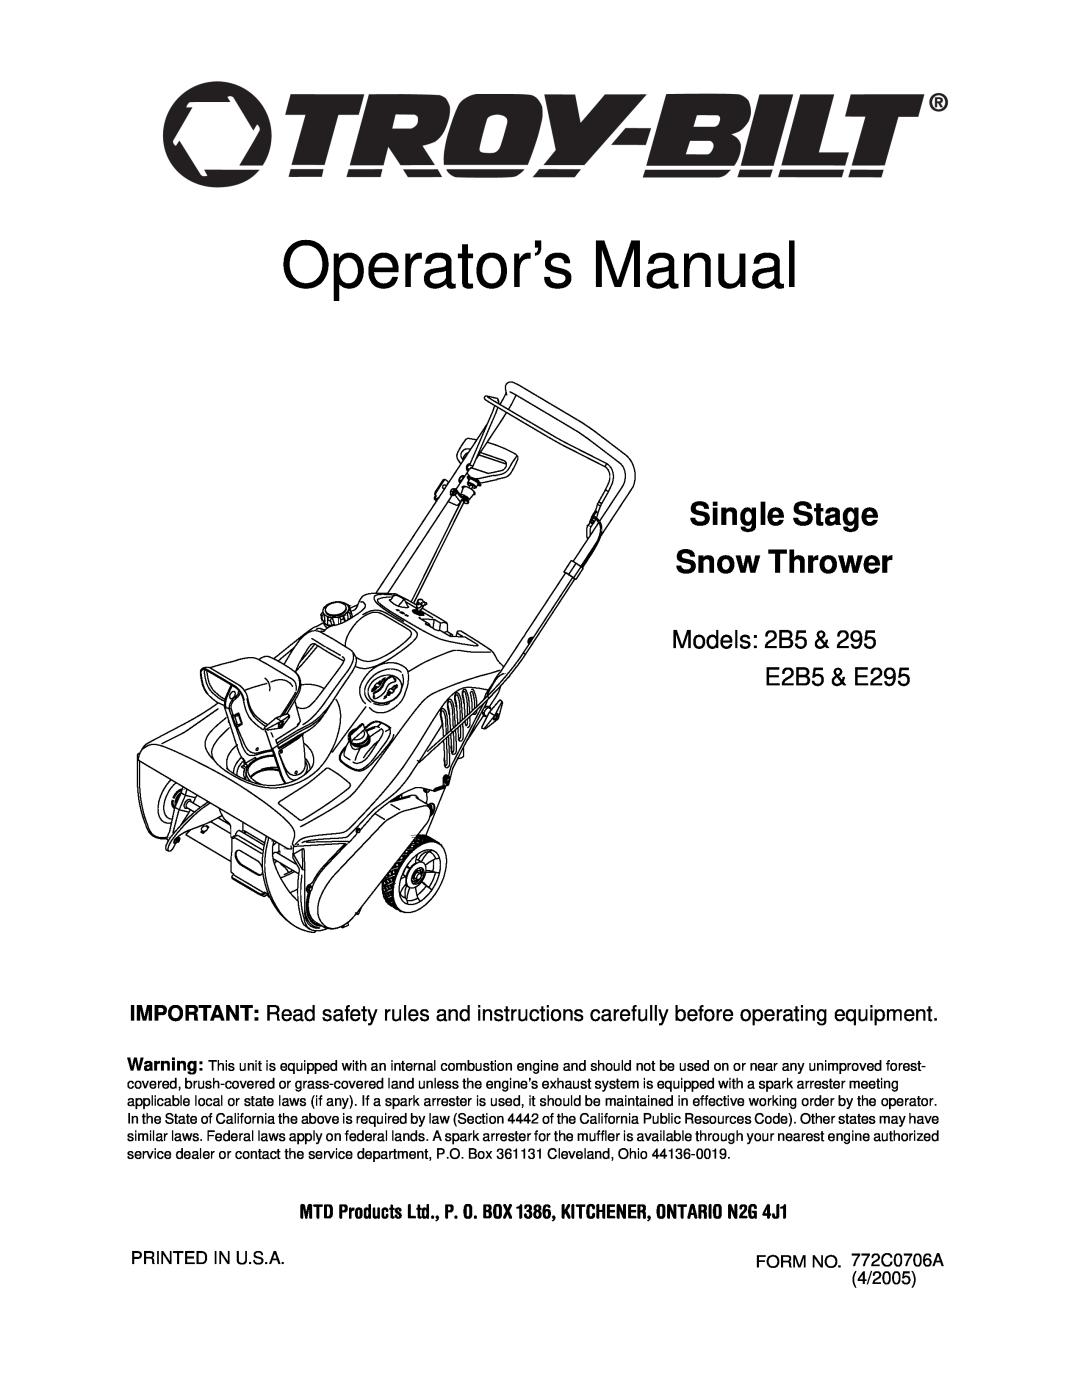 MTD manual Operator’s Manual, Single Stage Snow Thrower, Models 2B5 E2B5 & E295 